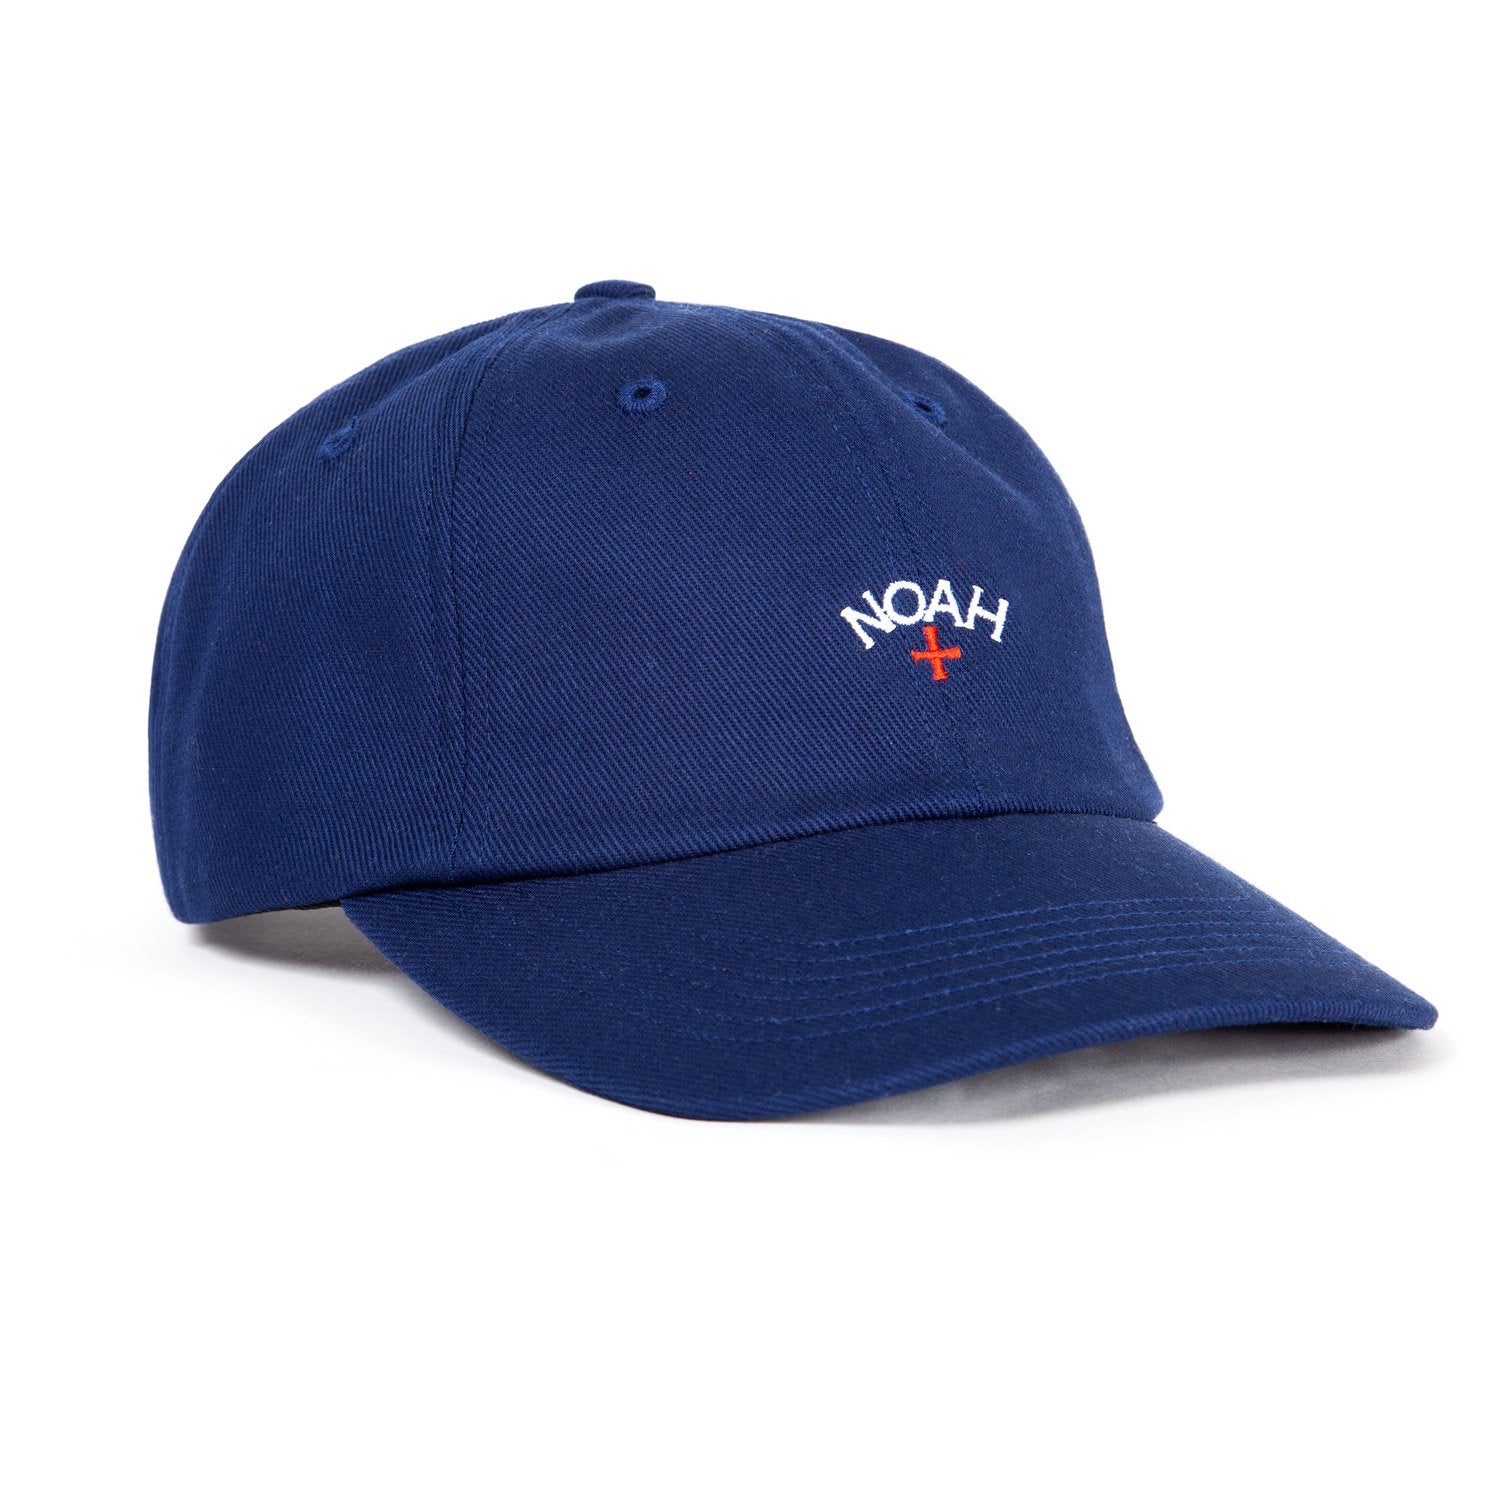 Noah Core Logo Hat - Navy